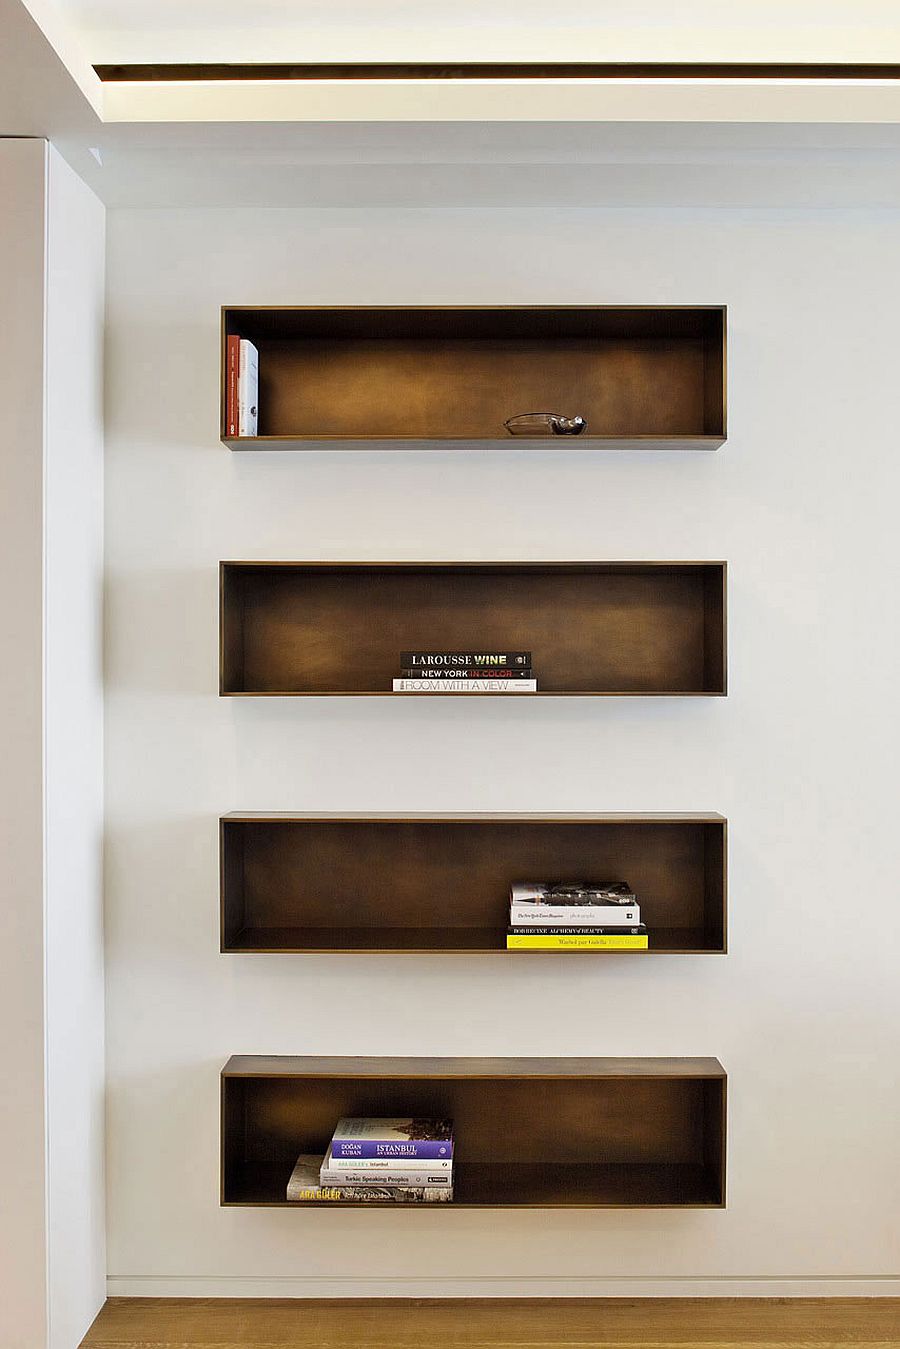 Smart box-like shelves give the interior a modernminimal look